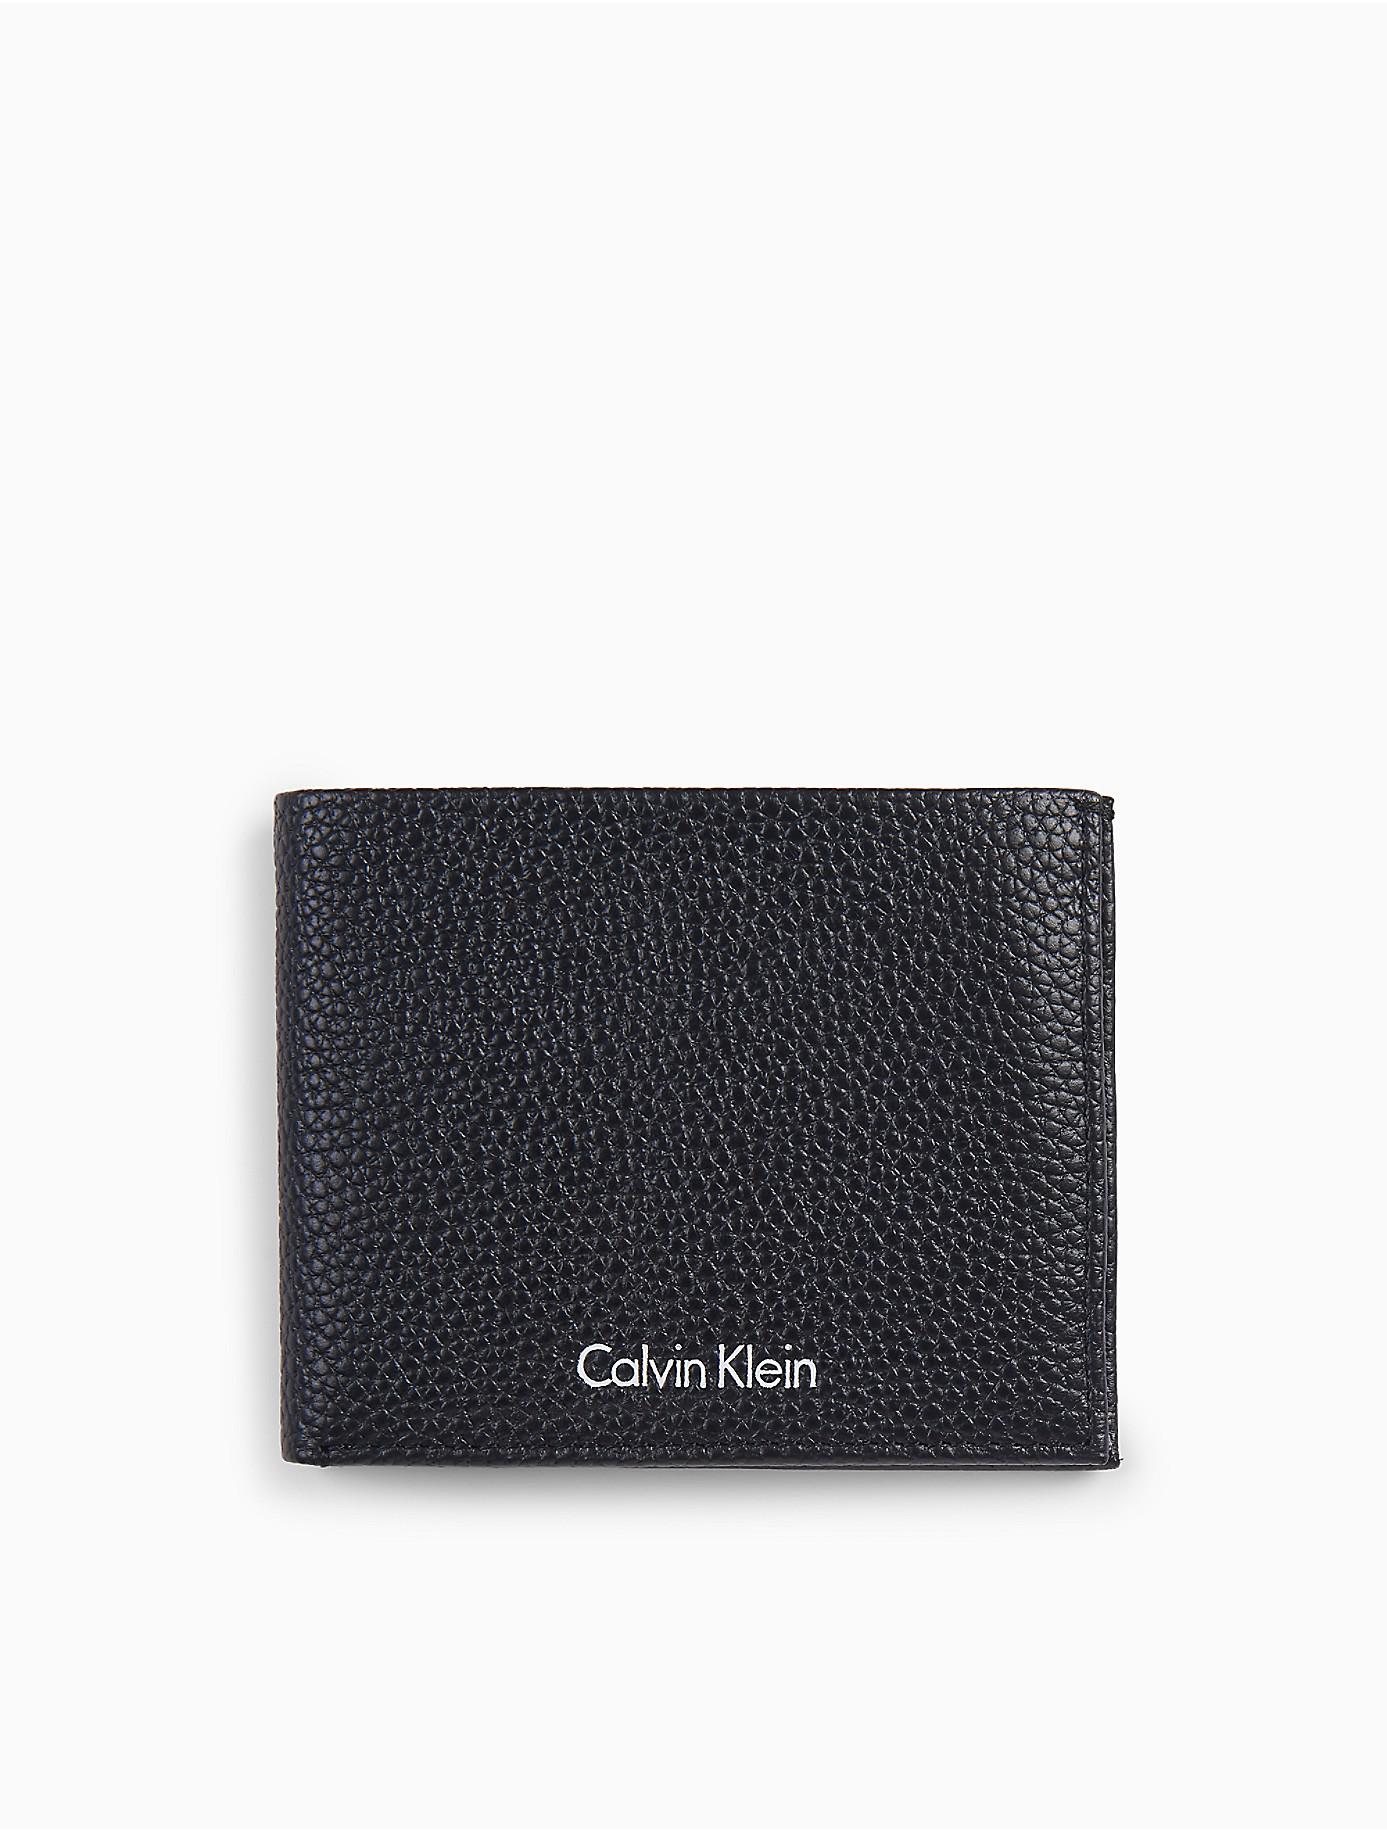 calvin klein leather slimfold wallet